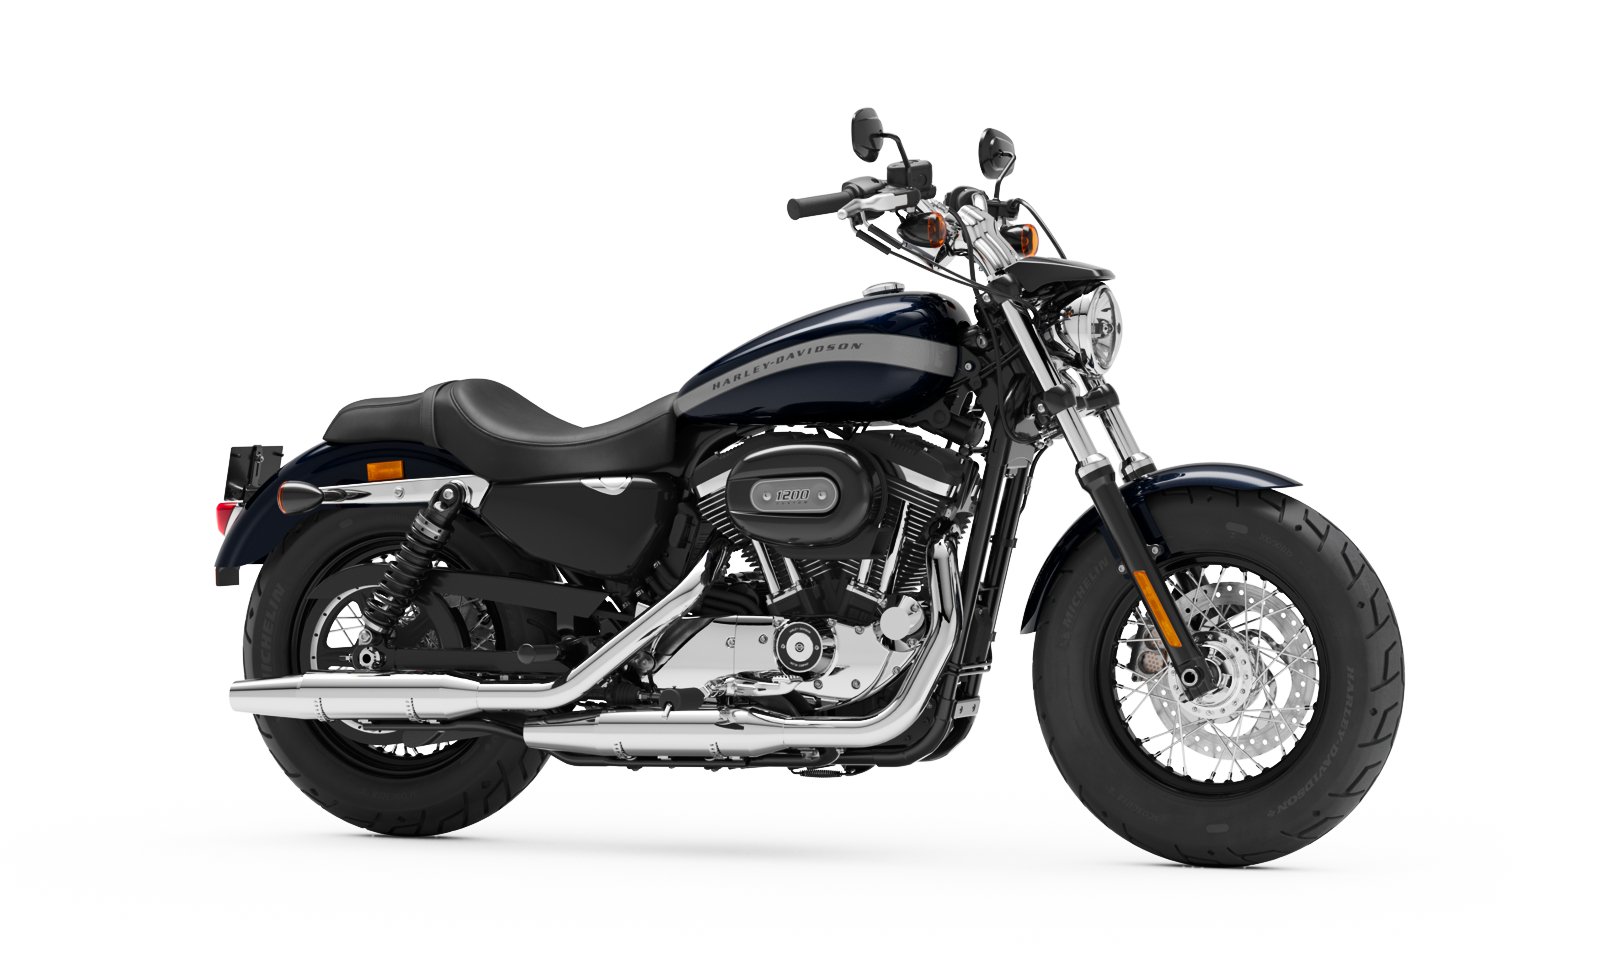 2020 Harley Davidson 1200 Custom Motorcycle Harley Davidson Asia Pacific Markets